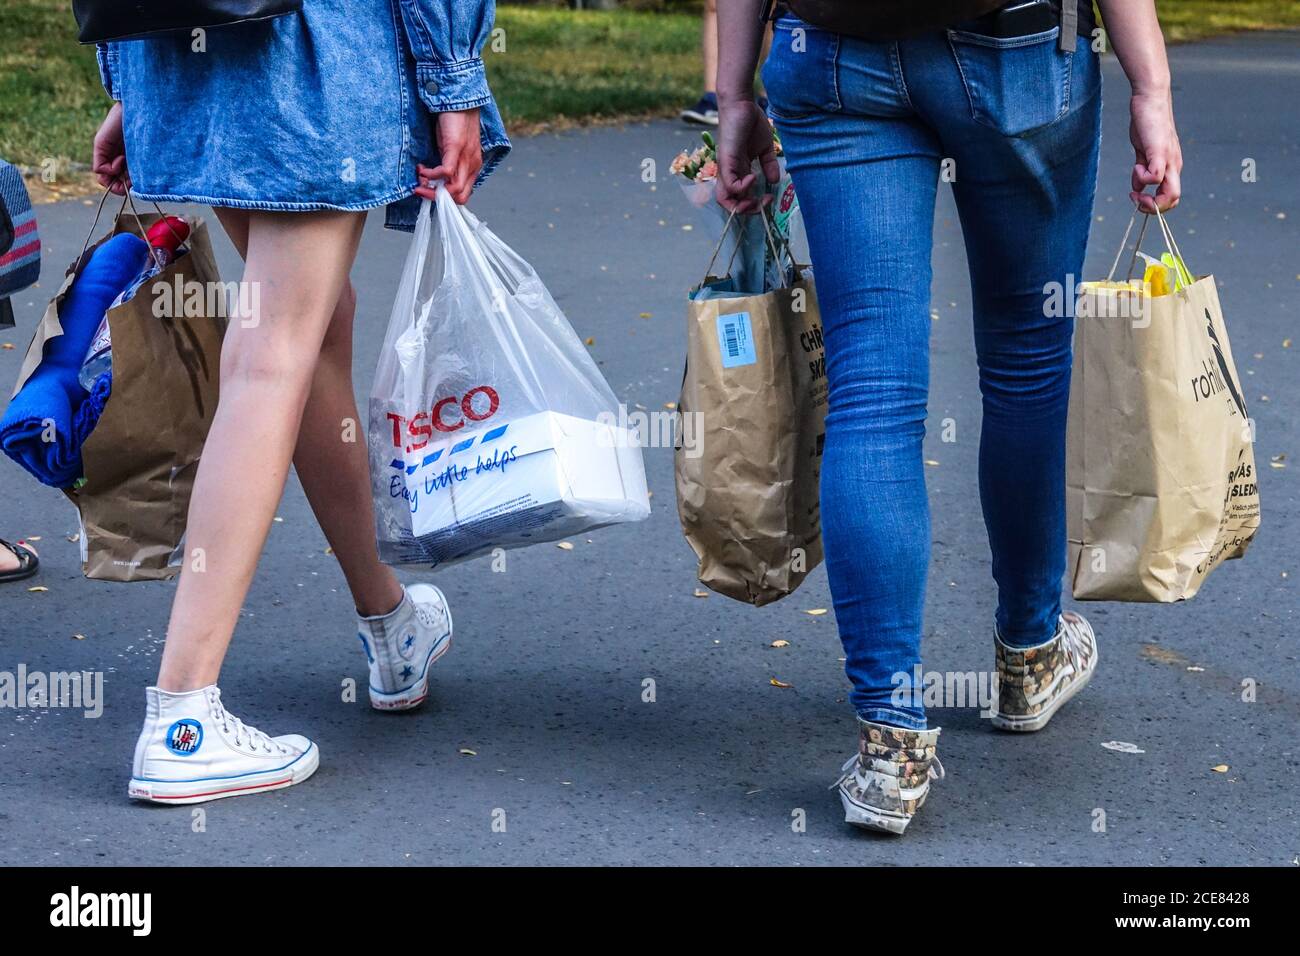 Carrying Plastic Bags Fotos e Imágenes de stock Alamy